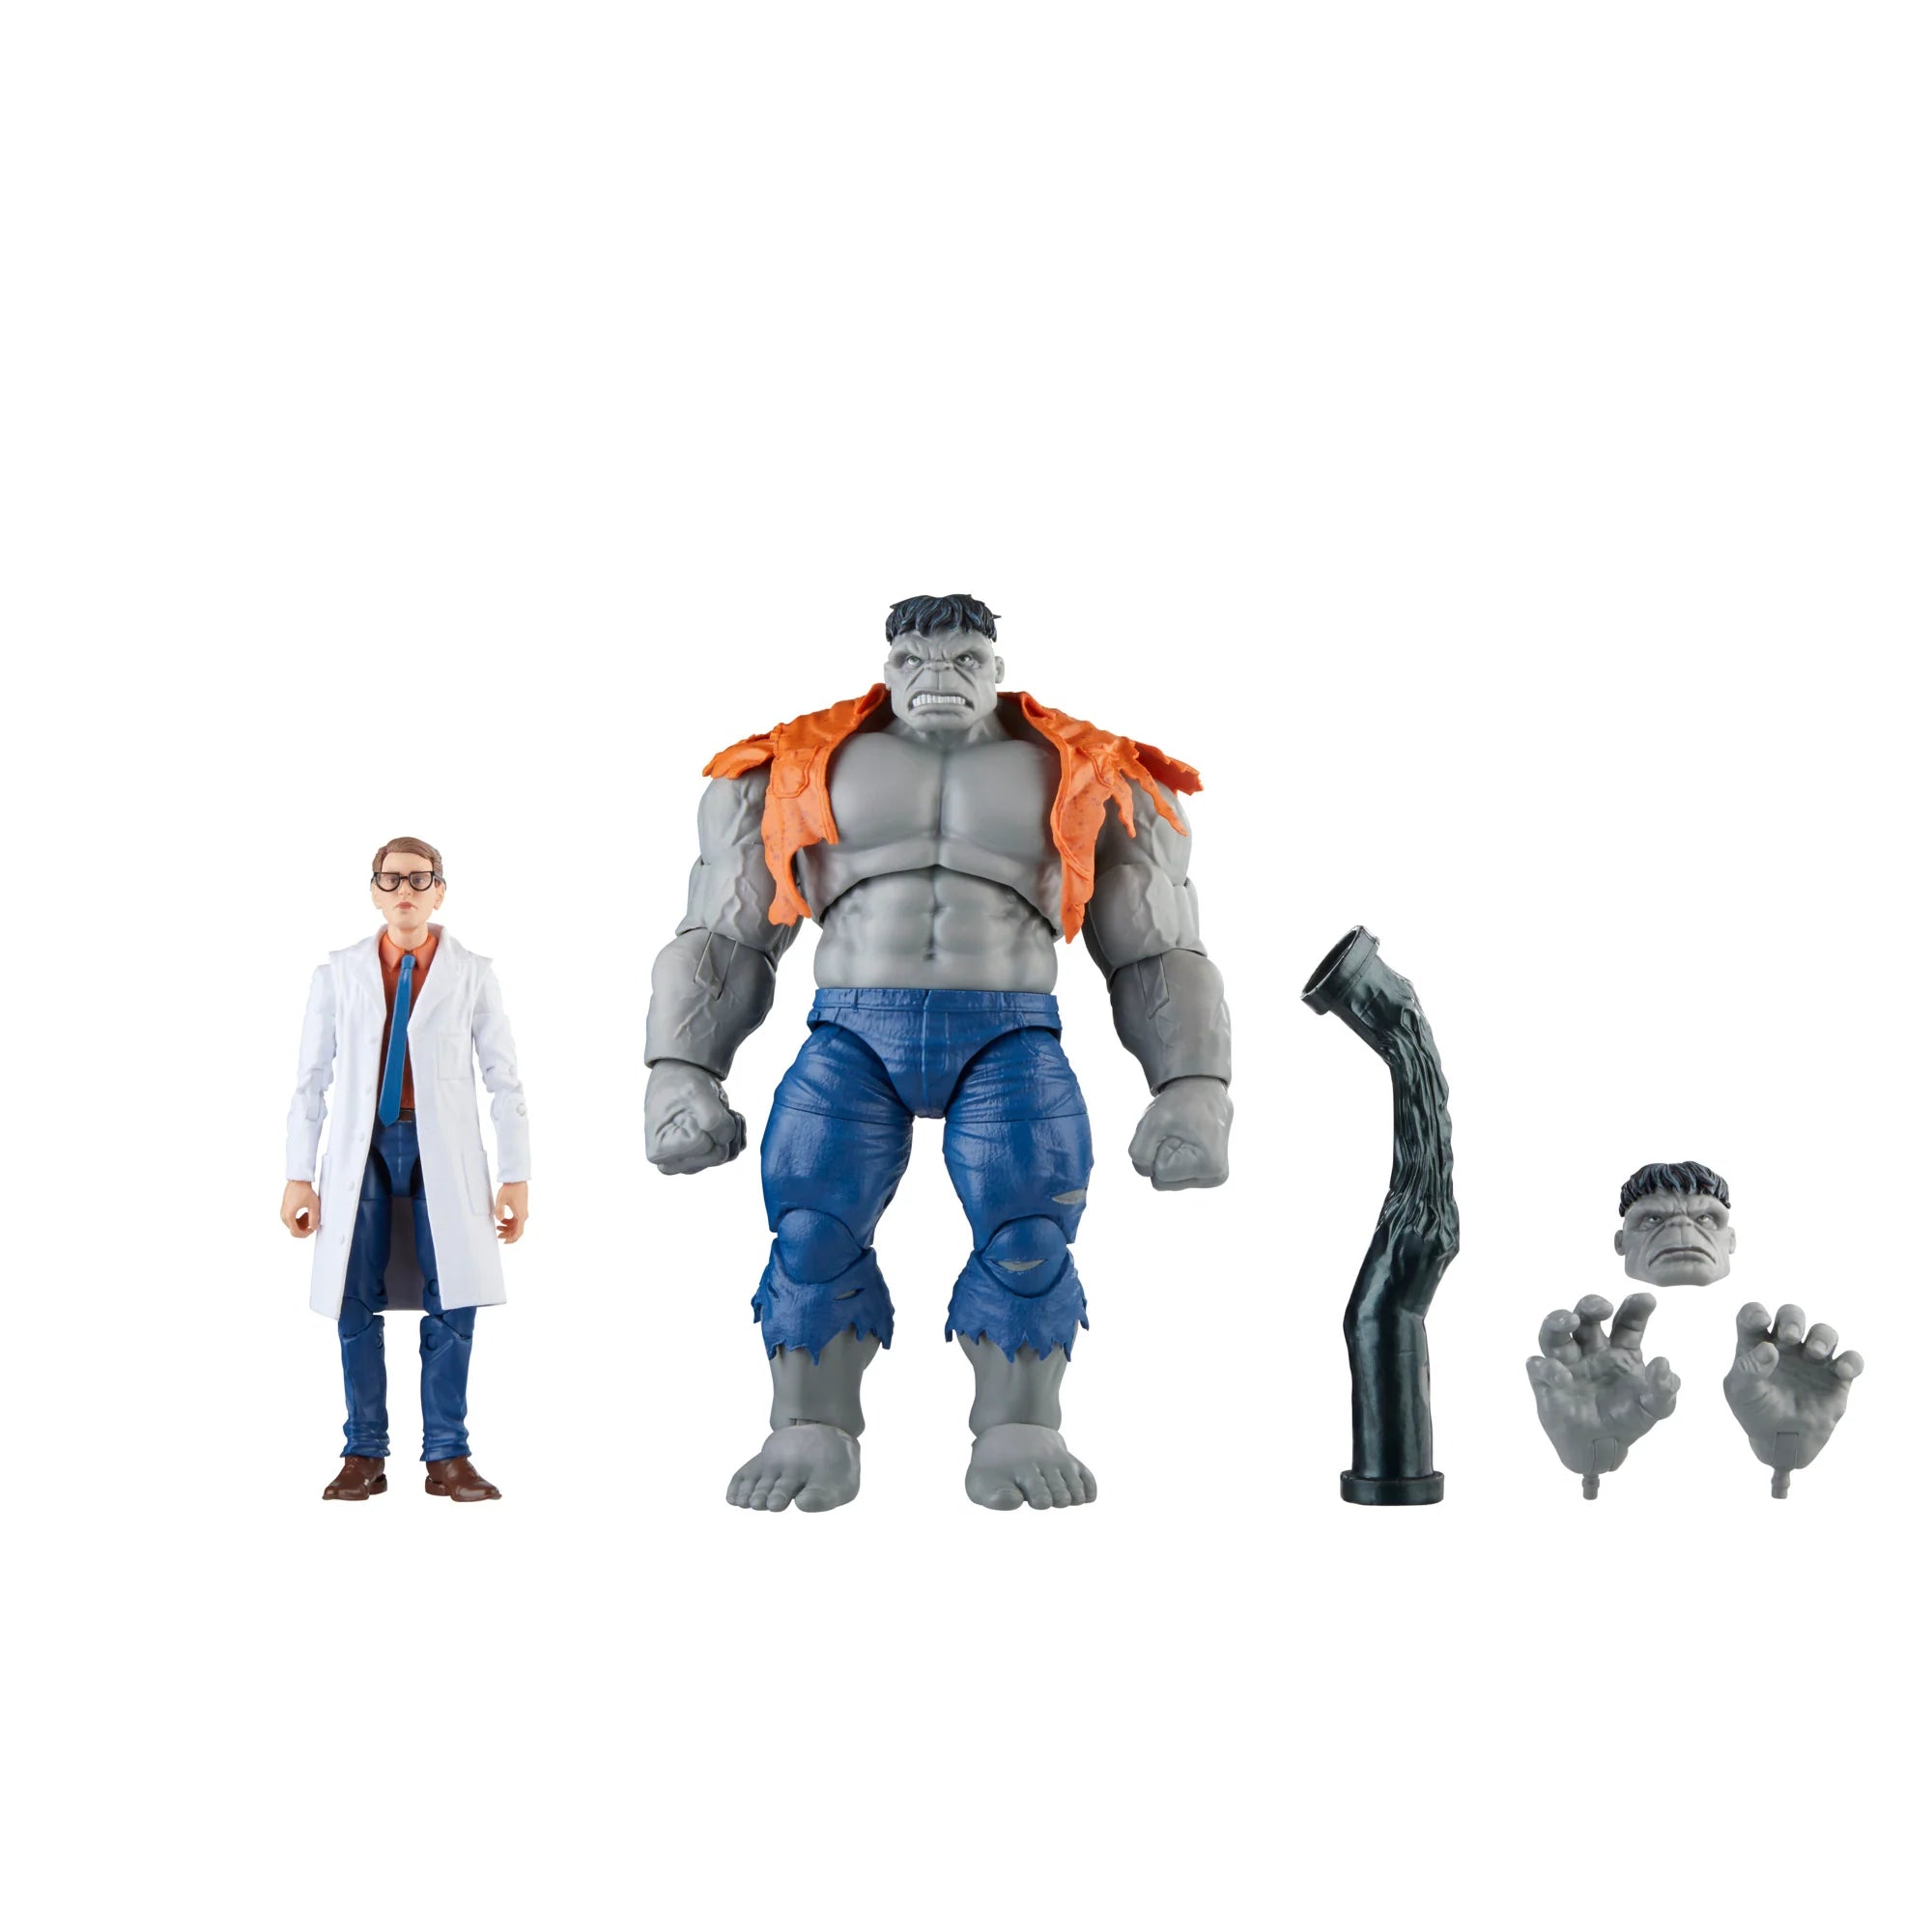 Marvel Legends Gray Hulk and Dr. Bruce Banner